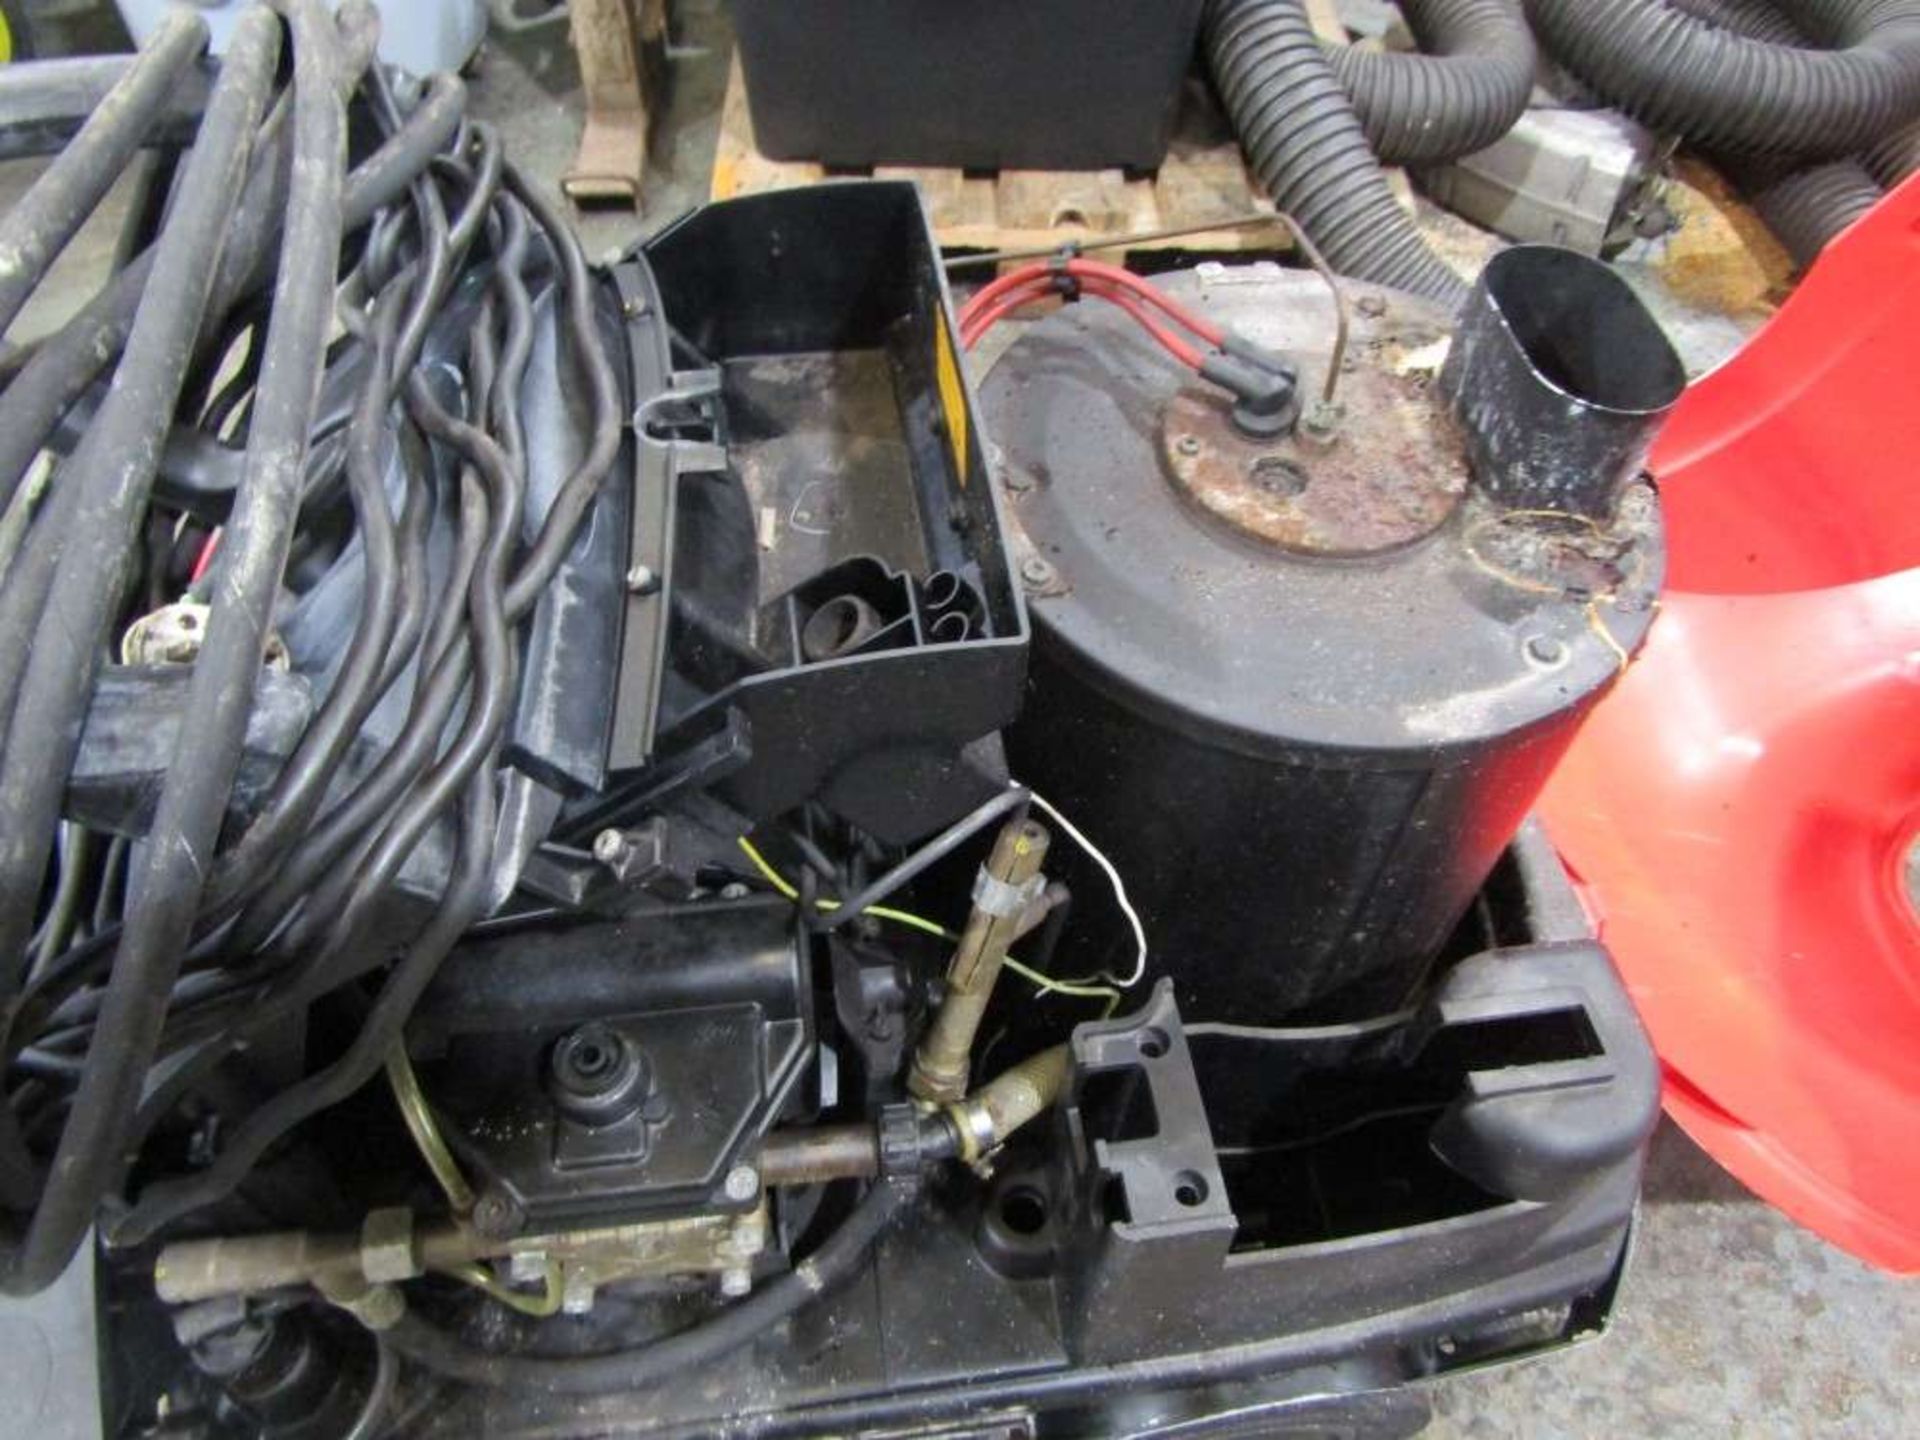 Karcher 601 Diesel Pressure Washer - Snap on Edition c/w Lance & Hose - Image 2 of 2